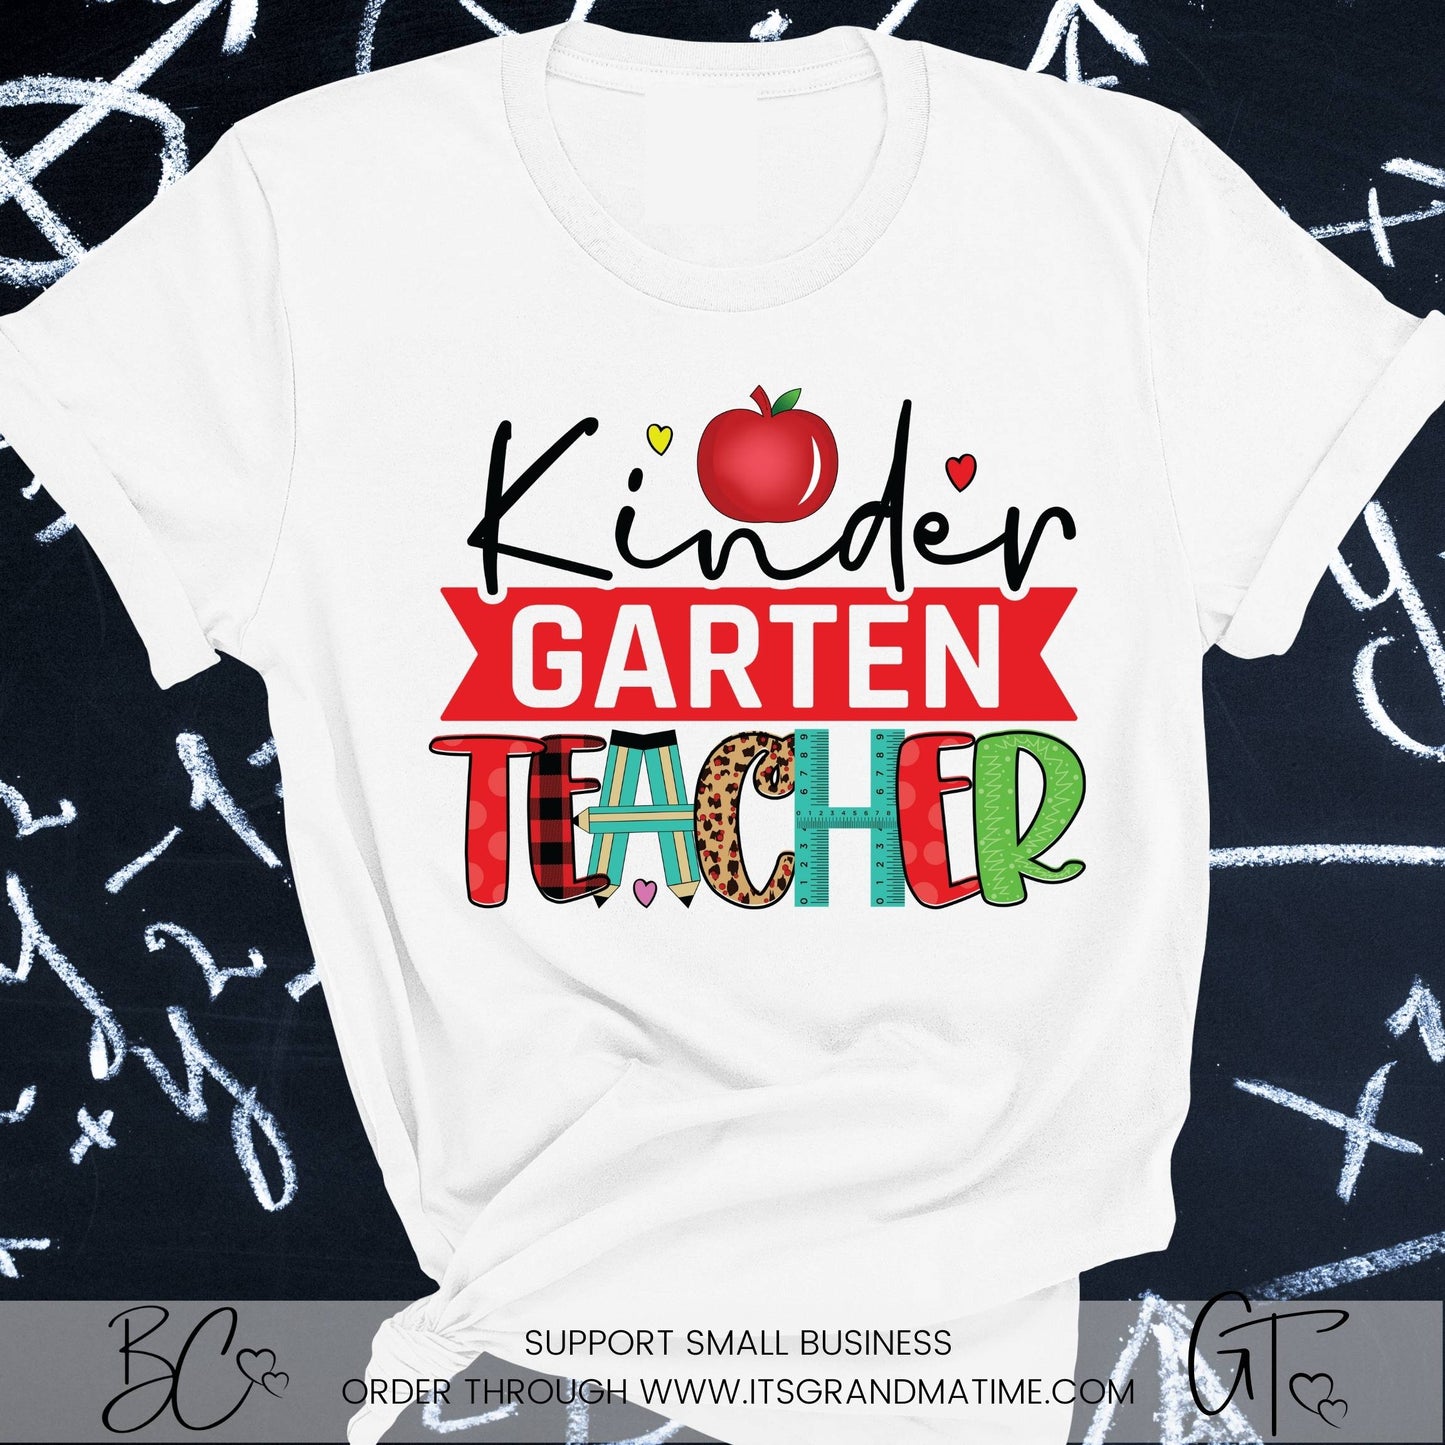 SUB595 Kinder Garten Teacher School Teacher Transfer